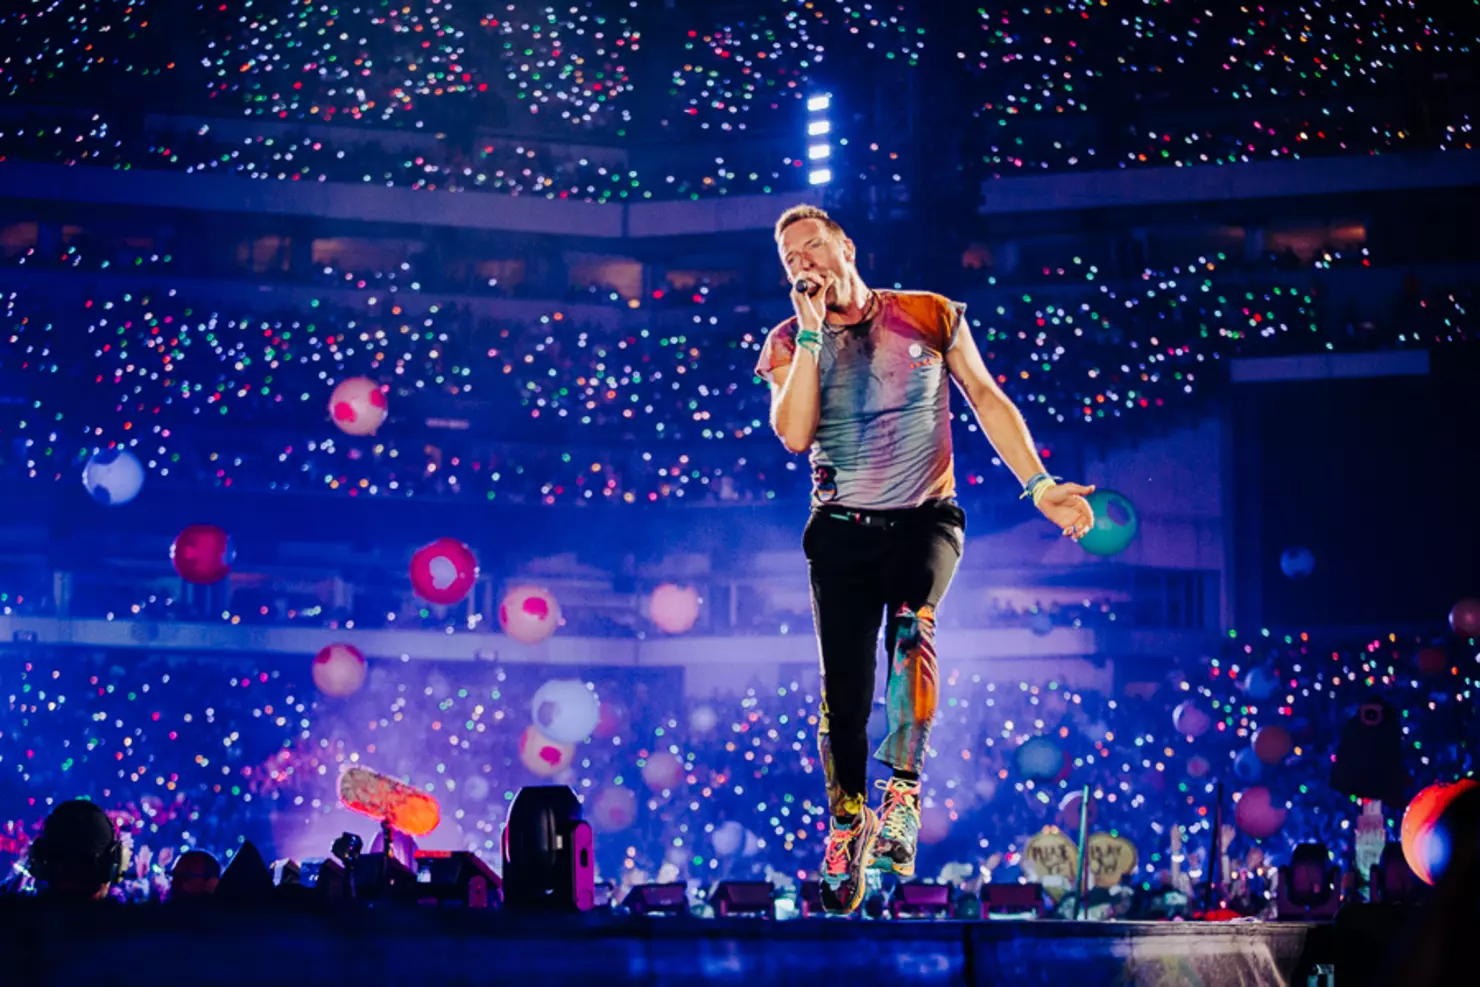 Coldplay Sky Full of Stars